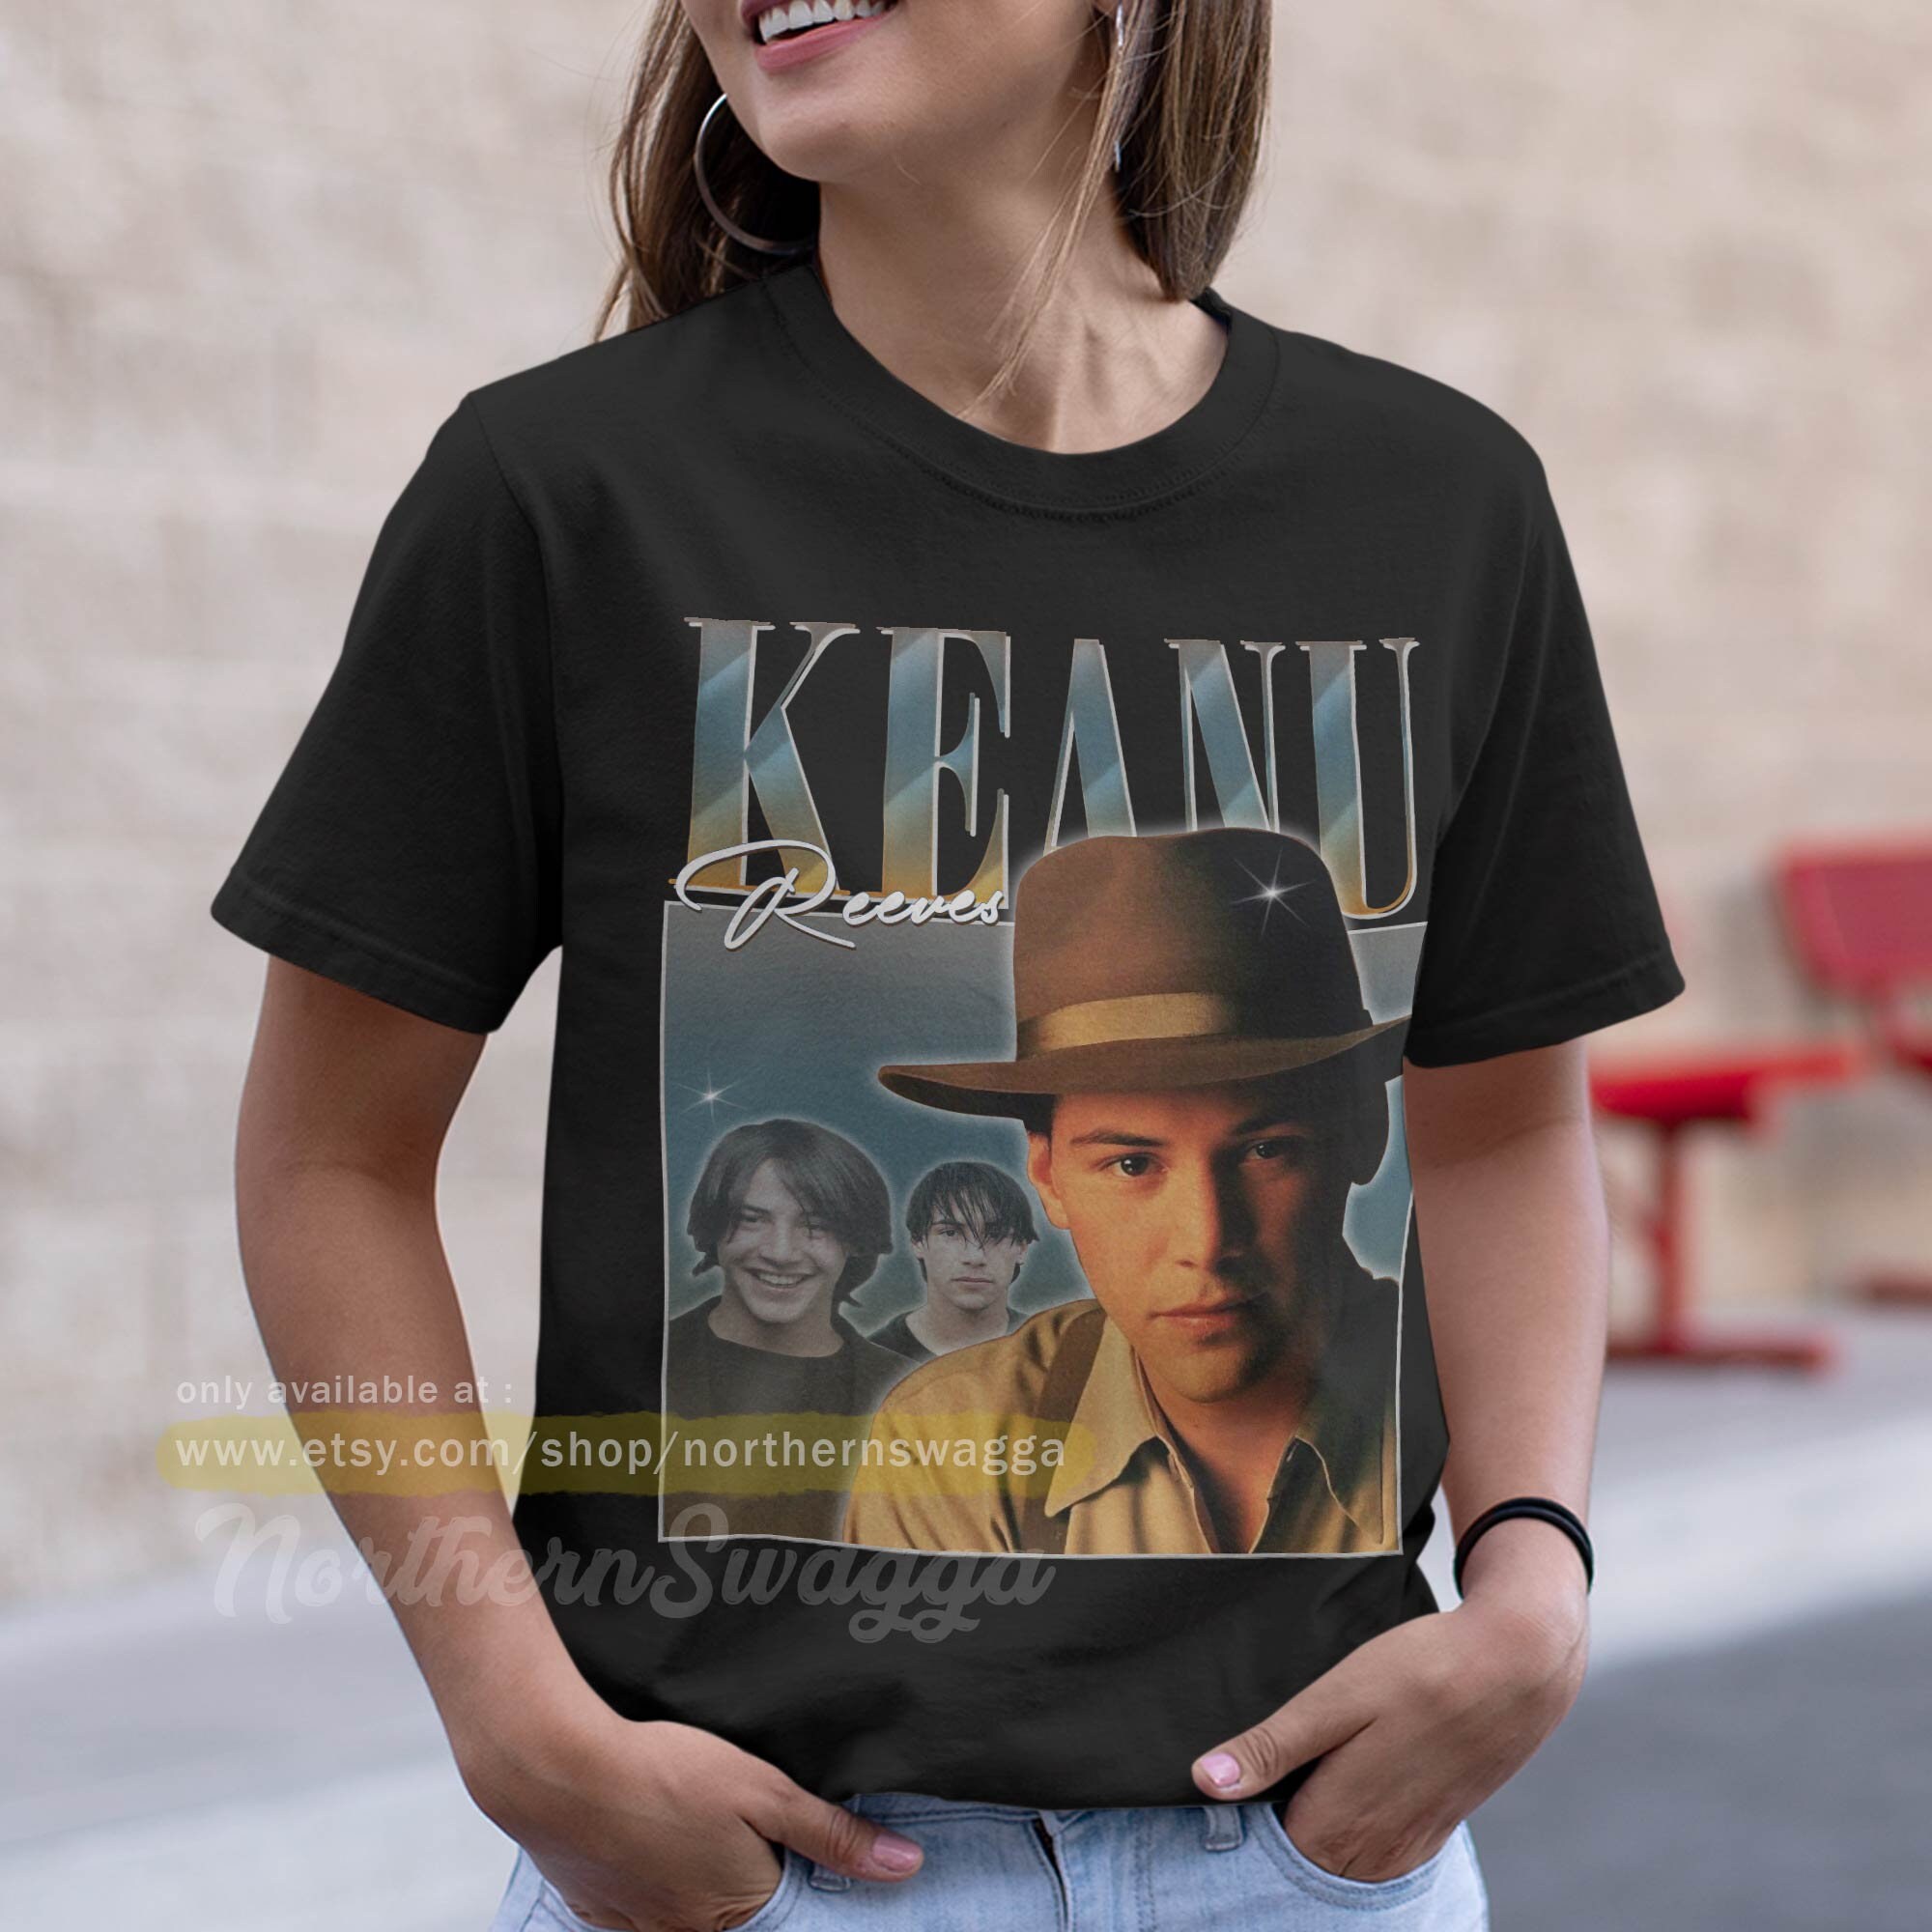 Keanu reeves shirt design retro style cool fan art t-shirt 90s poster 277 tee